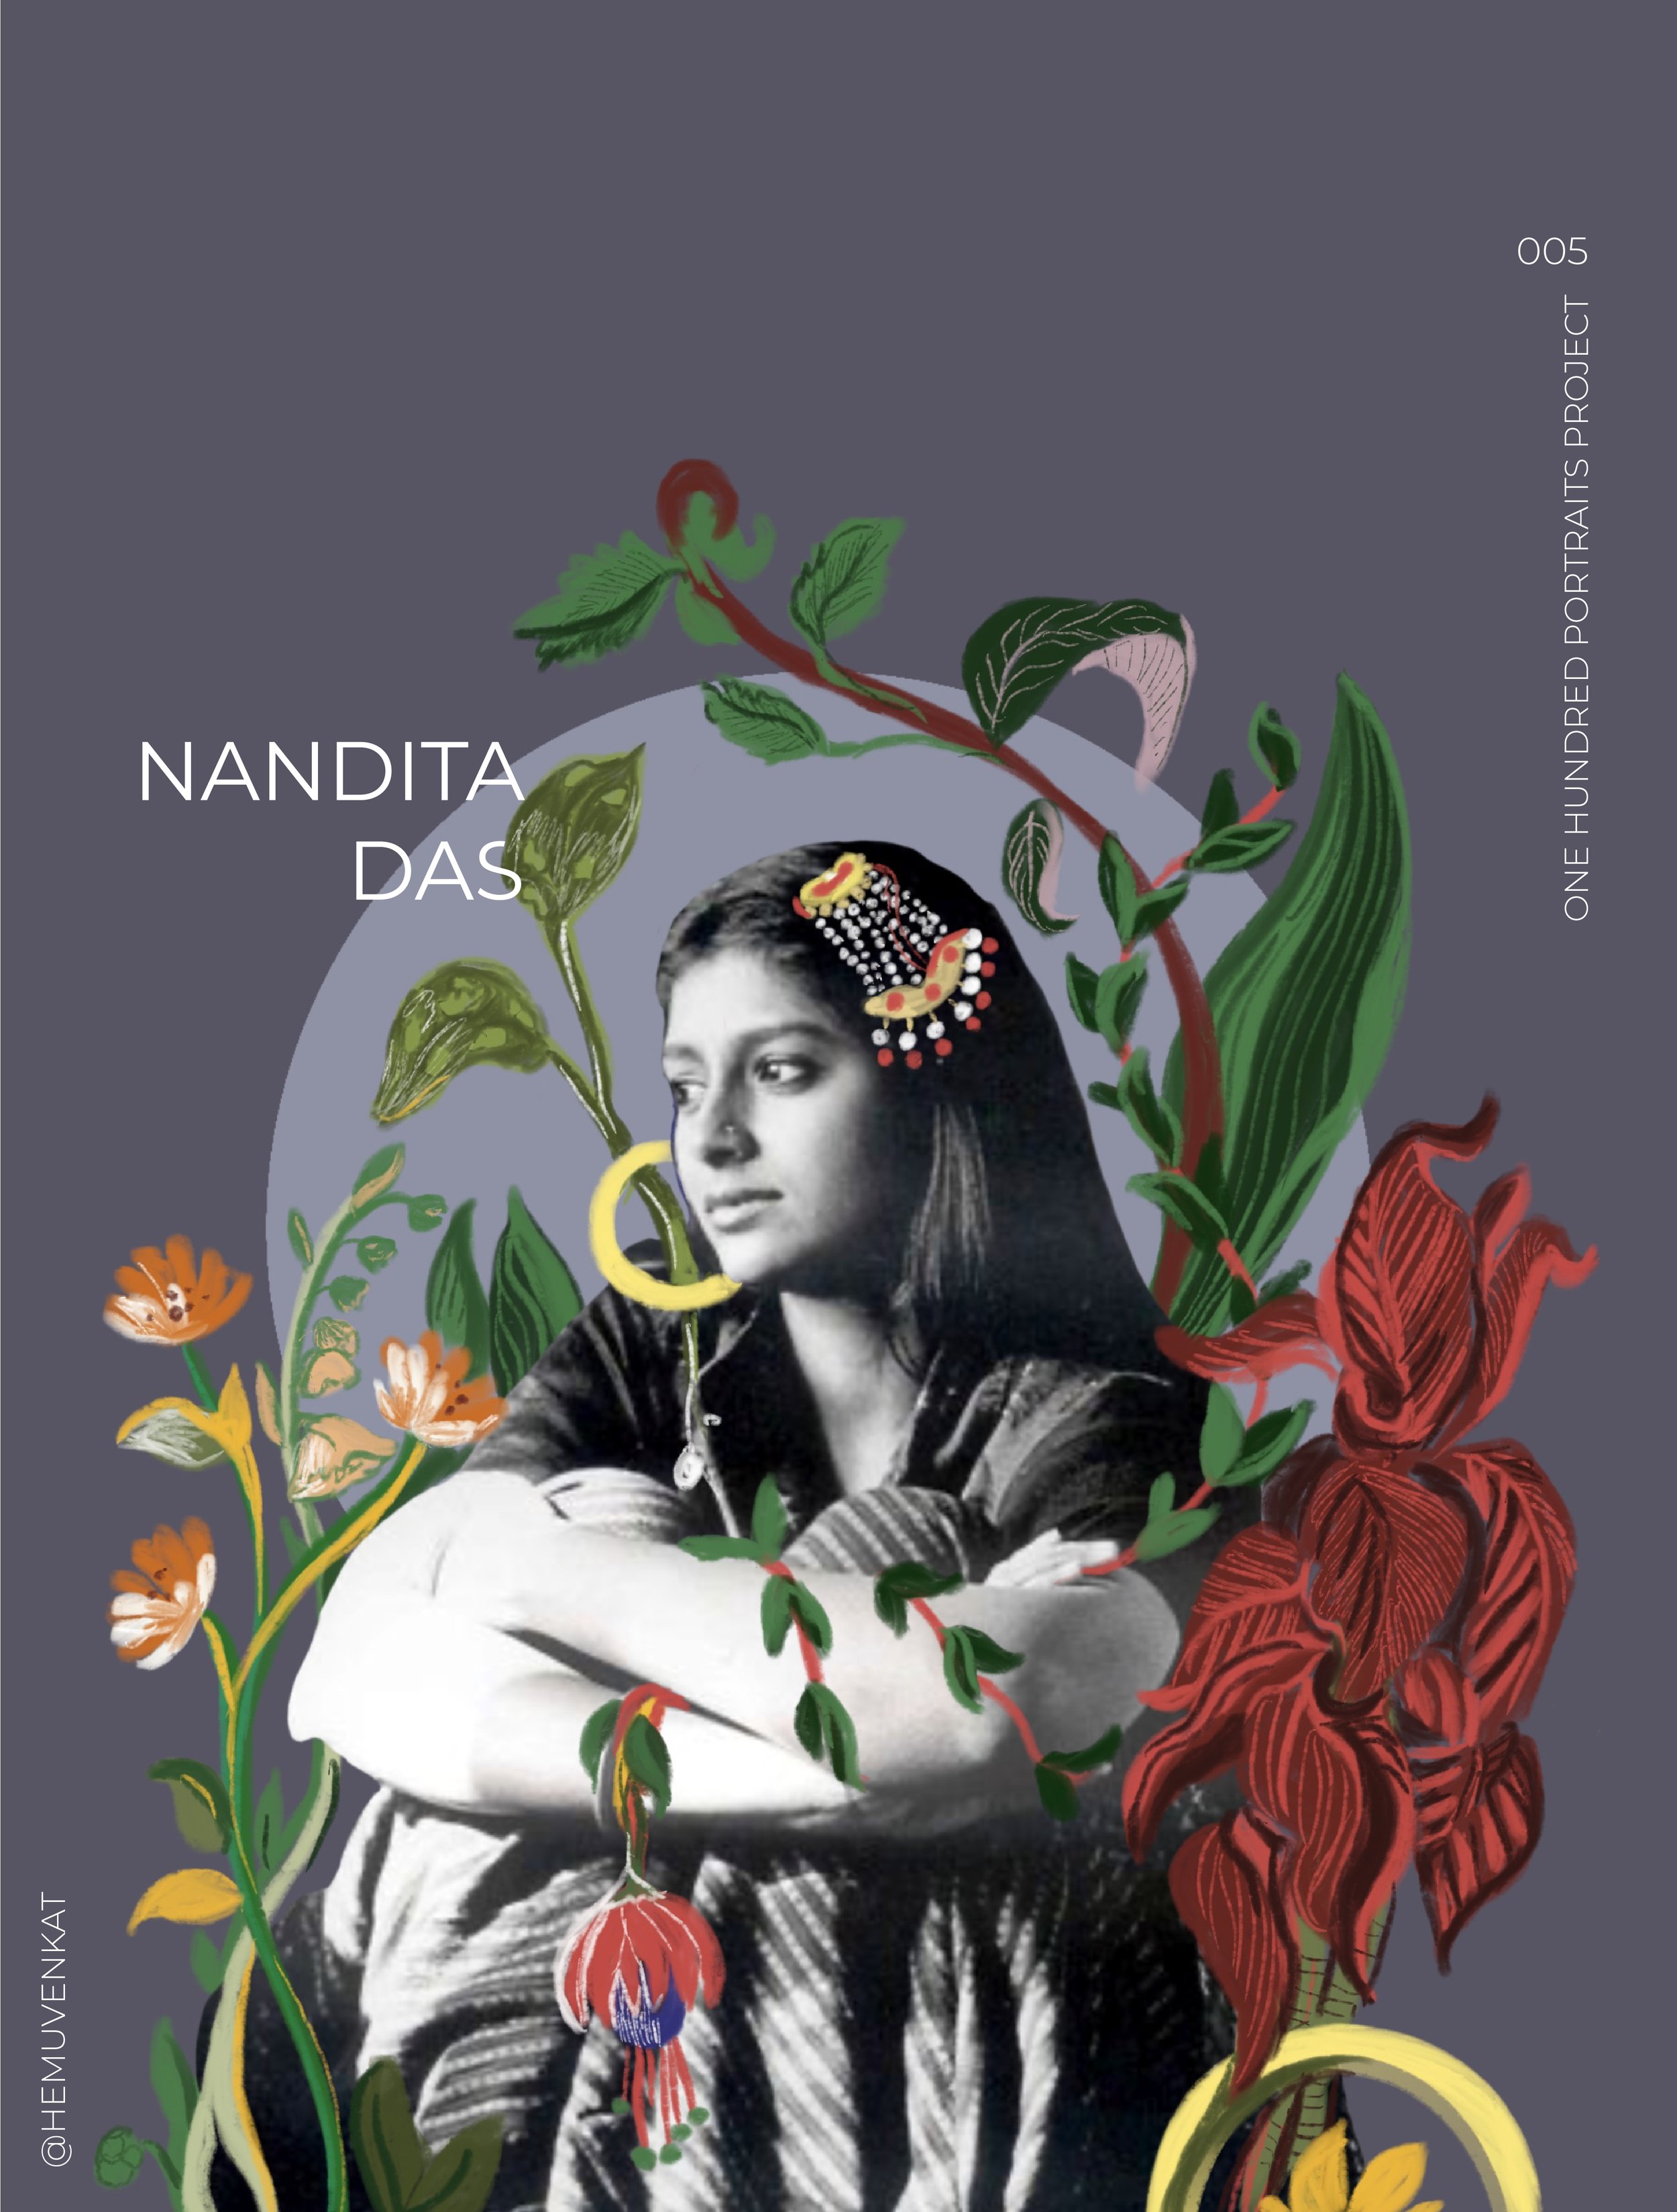 05_Nandita Das.jpg